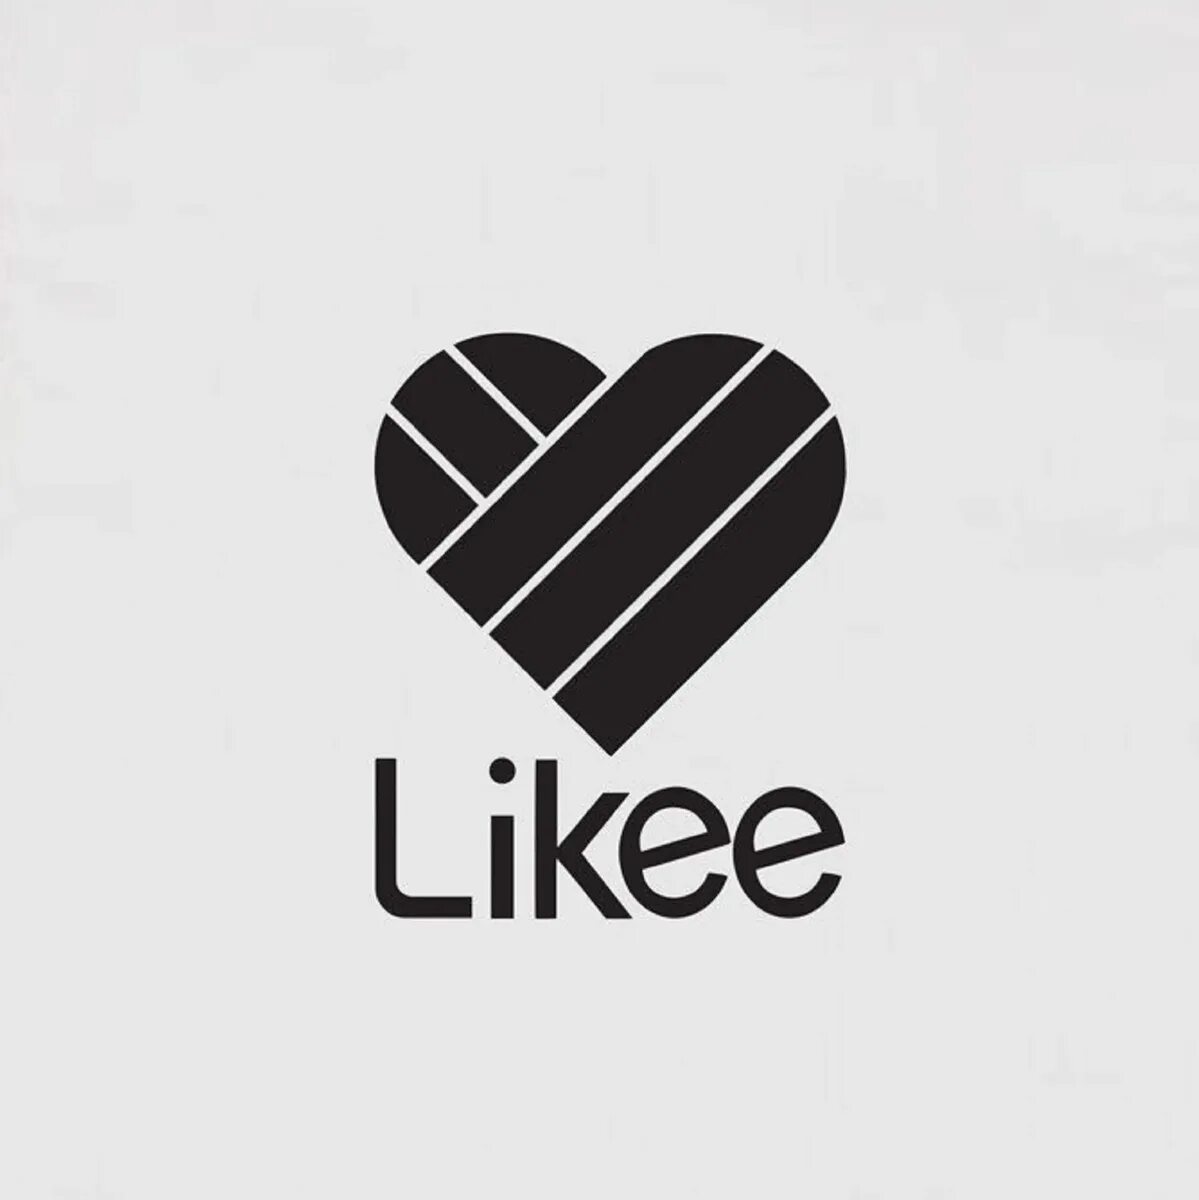 Lifelike app. Likee эмблема. Логотип лайка. Лайк приложение значок. Значок лайка черный.